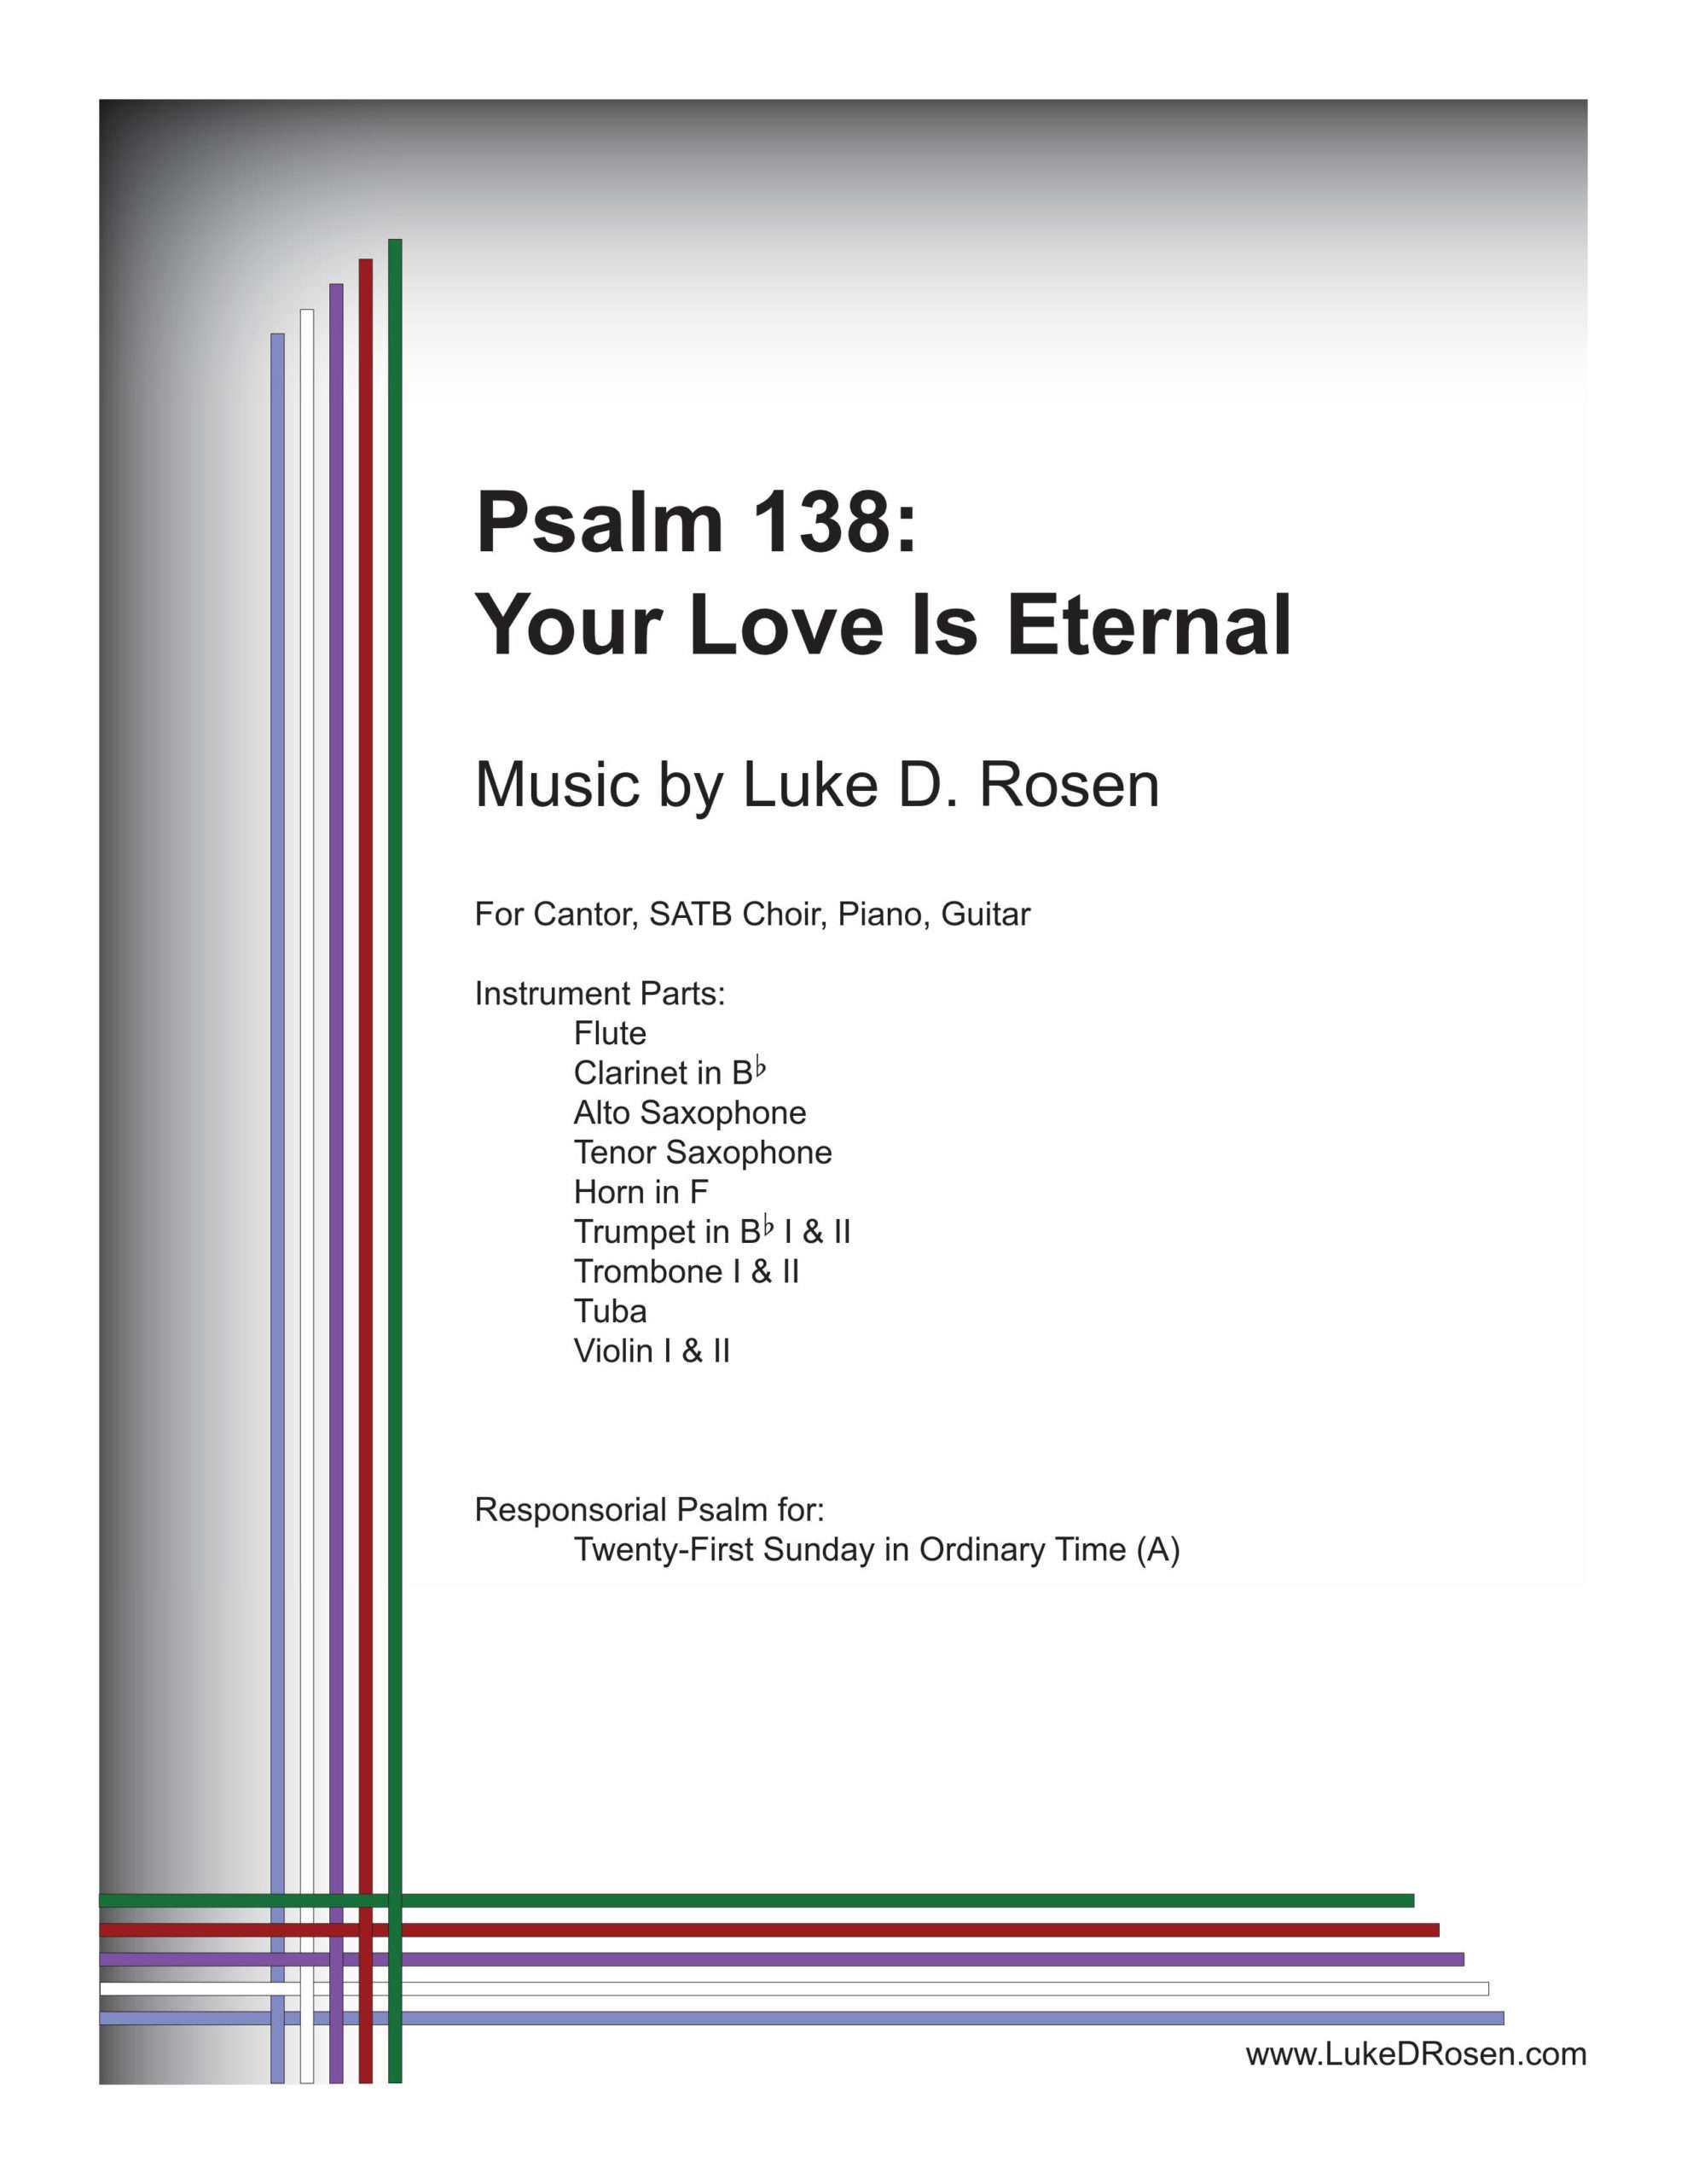 Psalm 138 – Your Love Is Eternal (Rosen)